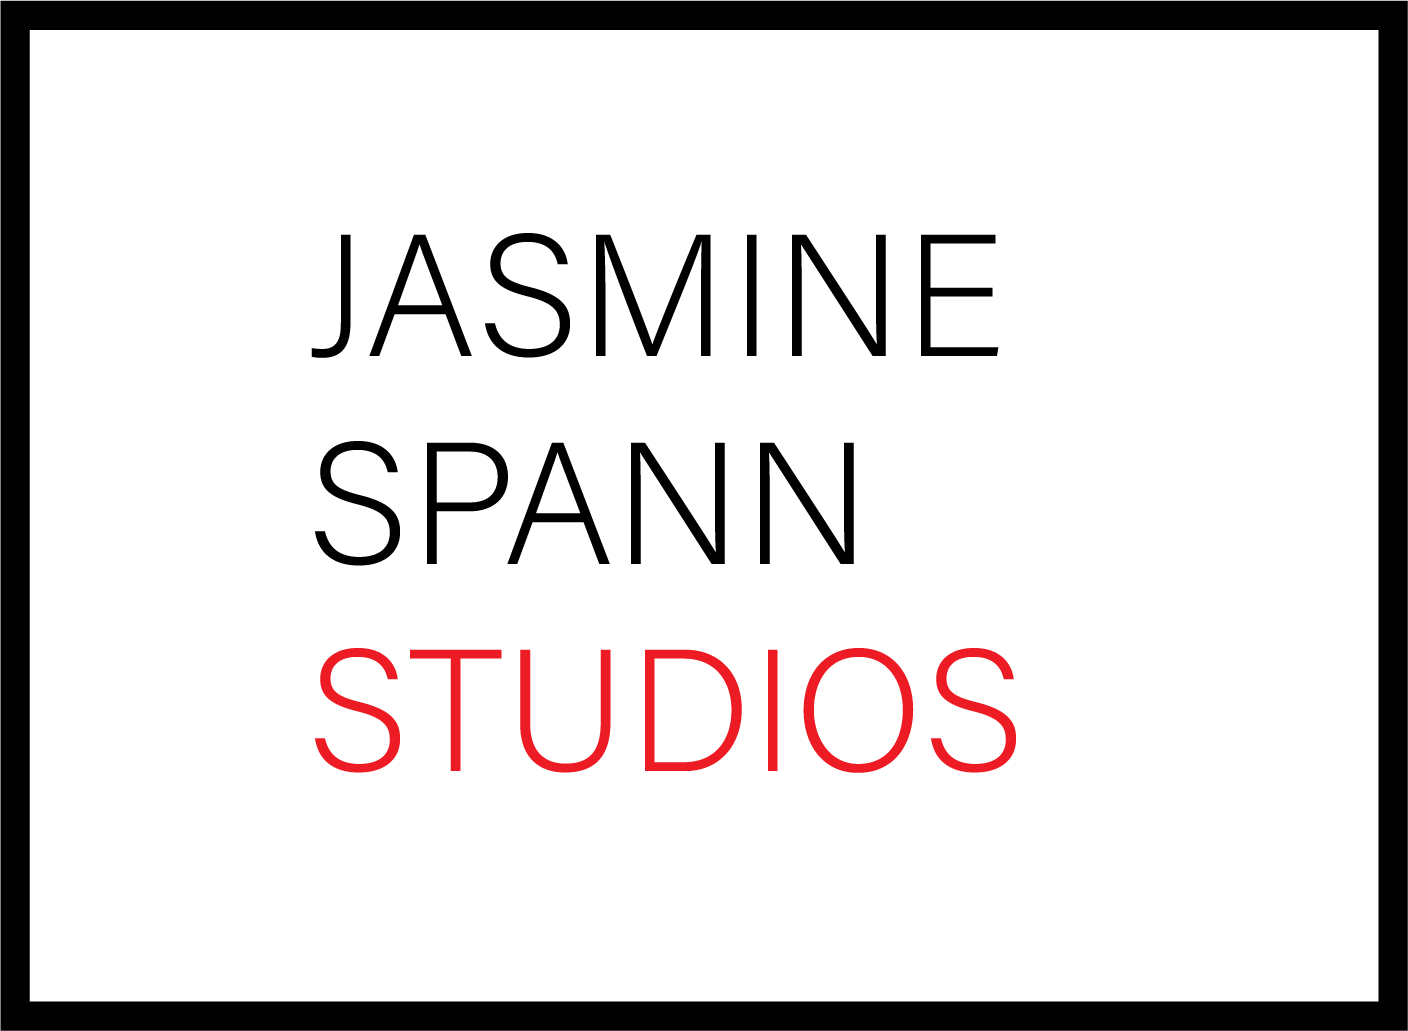 Jasmine Spann Studios - Atlanta Business &amp; Corporate Video